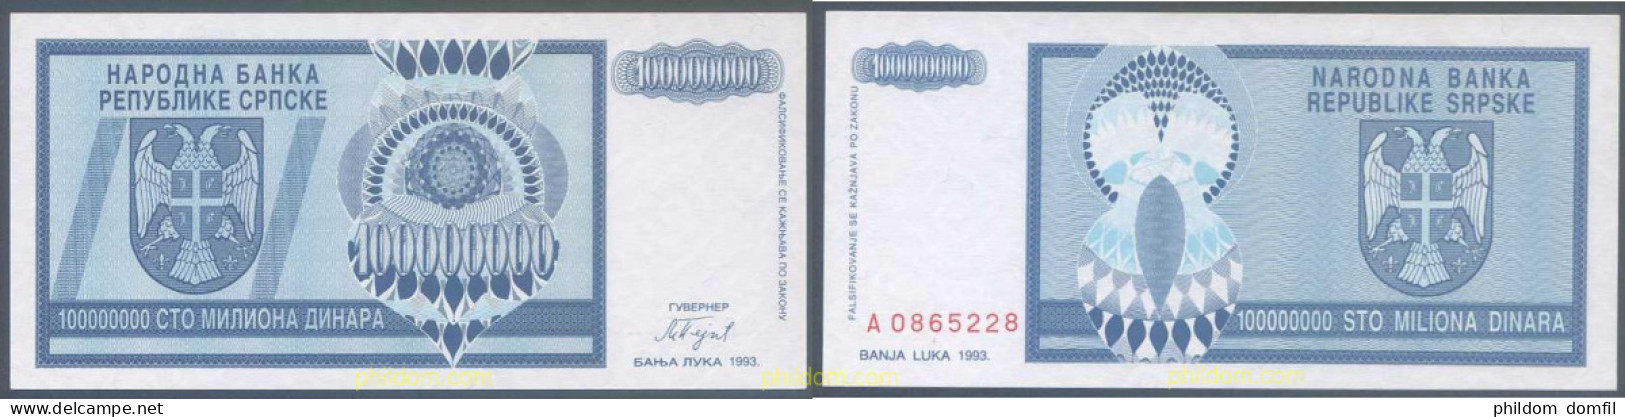 8037 BOSNIA-HERZEGOVINA. Adm Serbia 1993 SERBIA 100000000 DINARA 1993 - Serbien